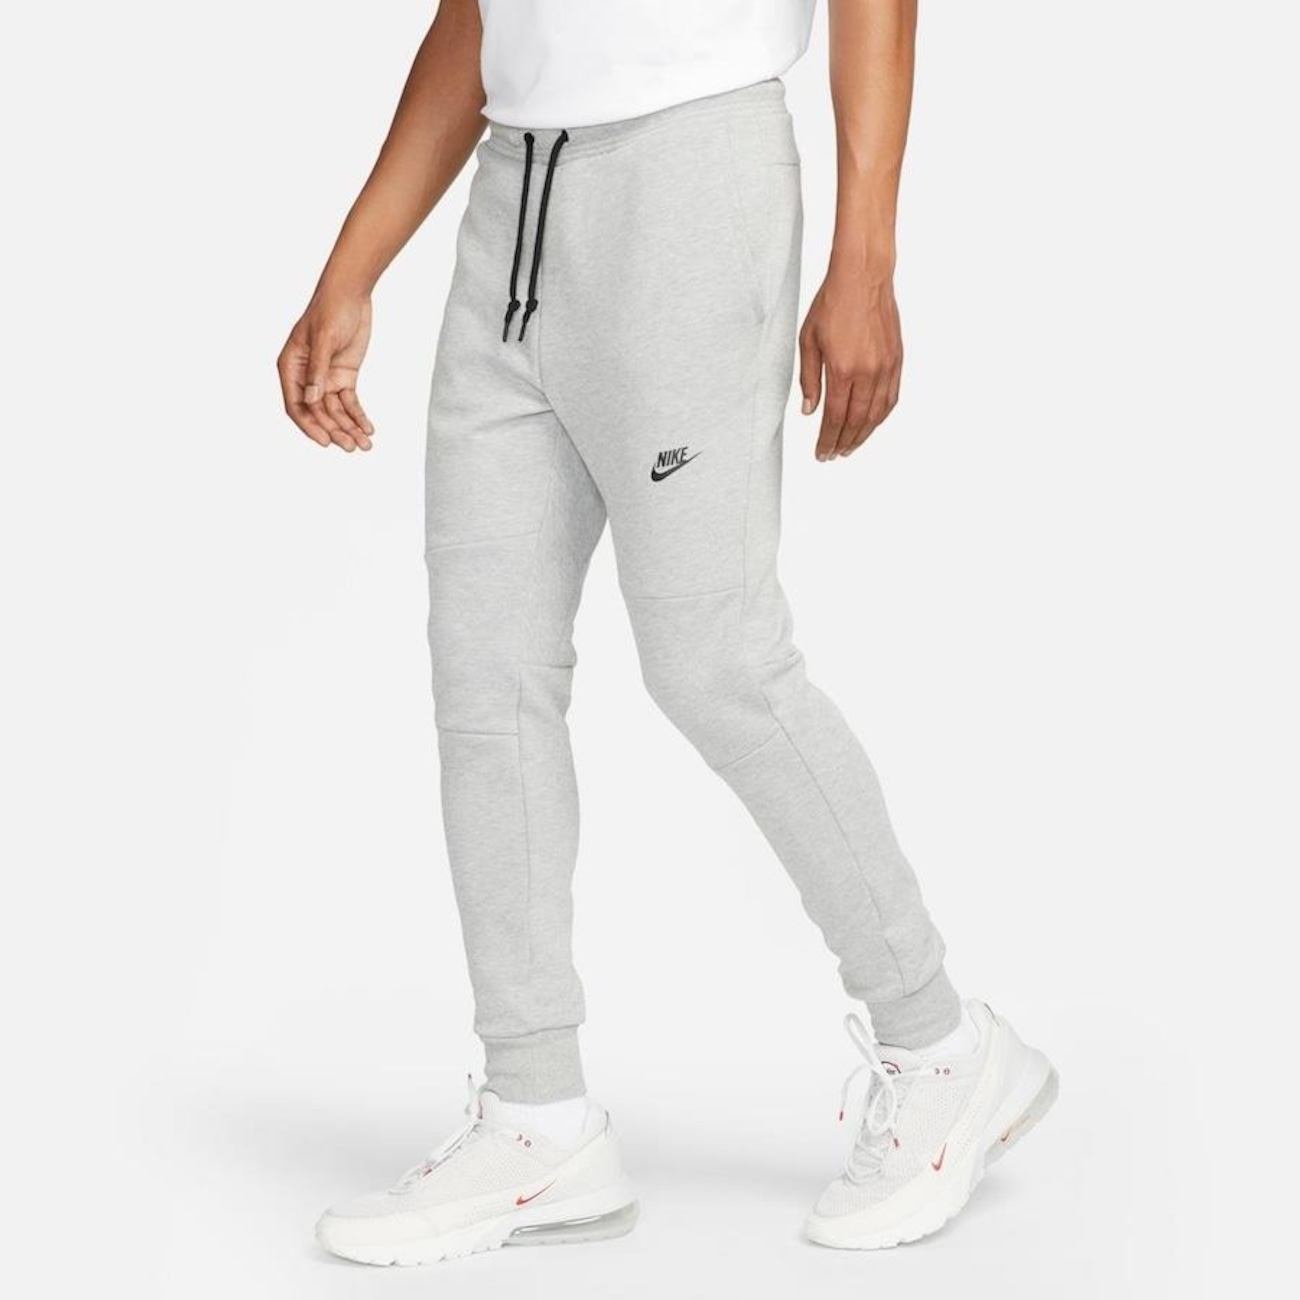 Calça Nike Tech Fleece - Masculina